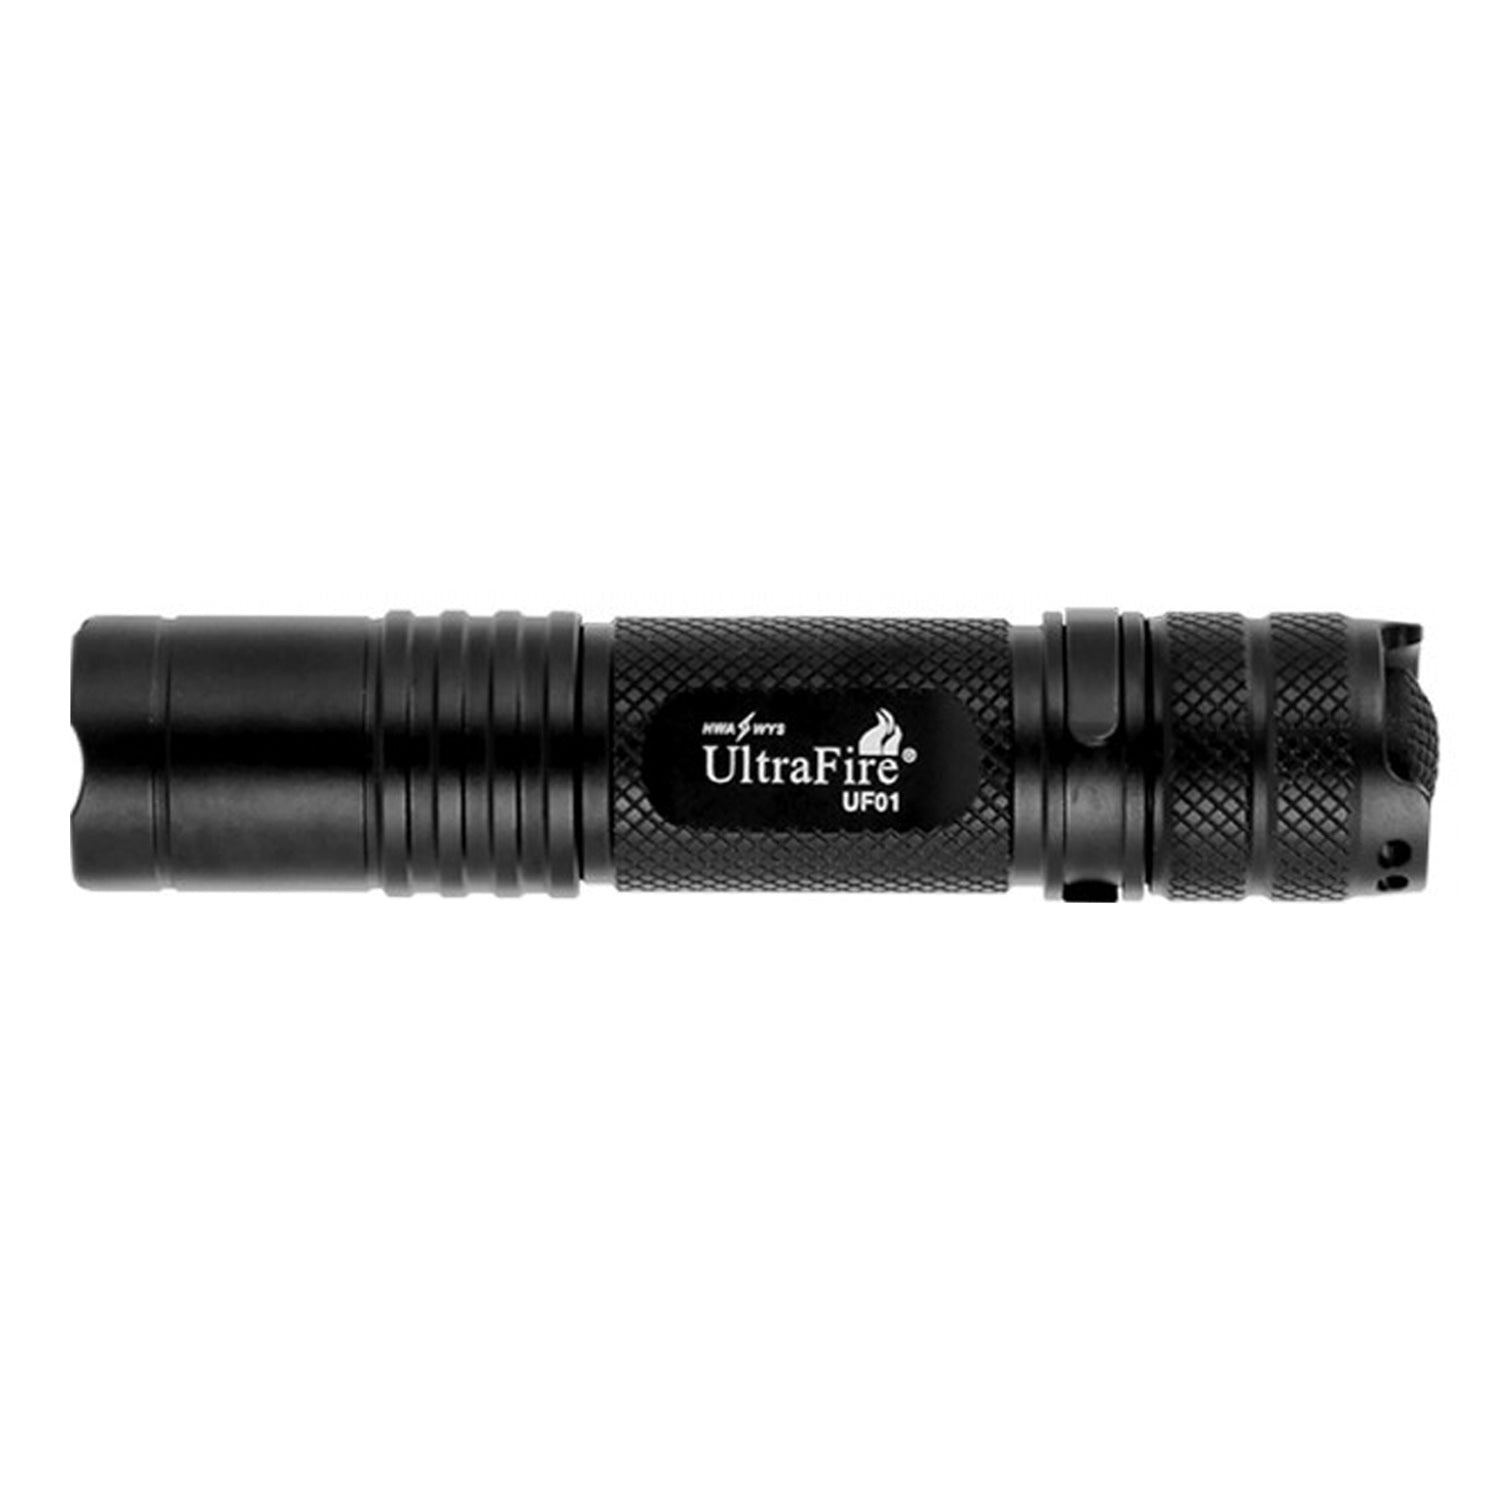 UltraFire Classic UF01 Flashlight